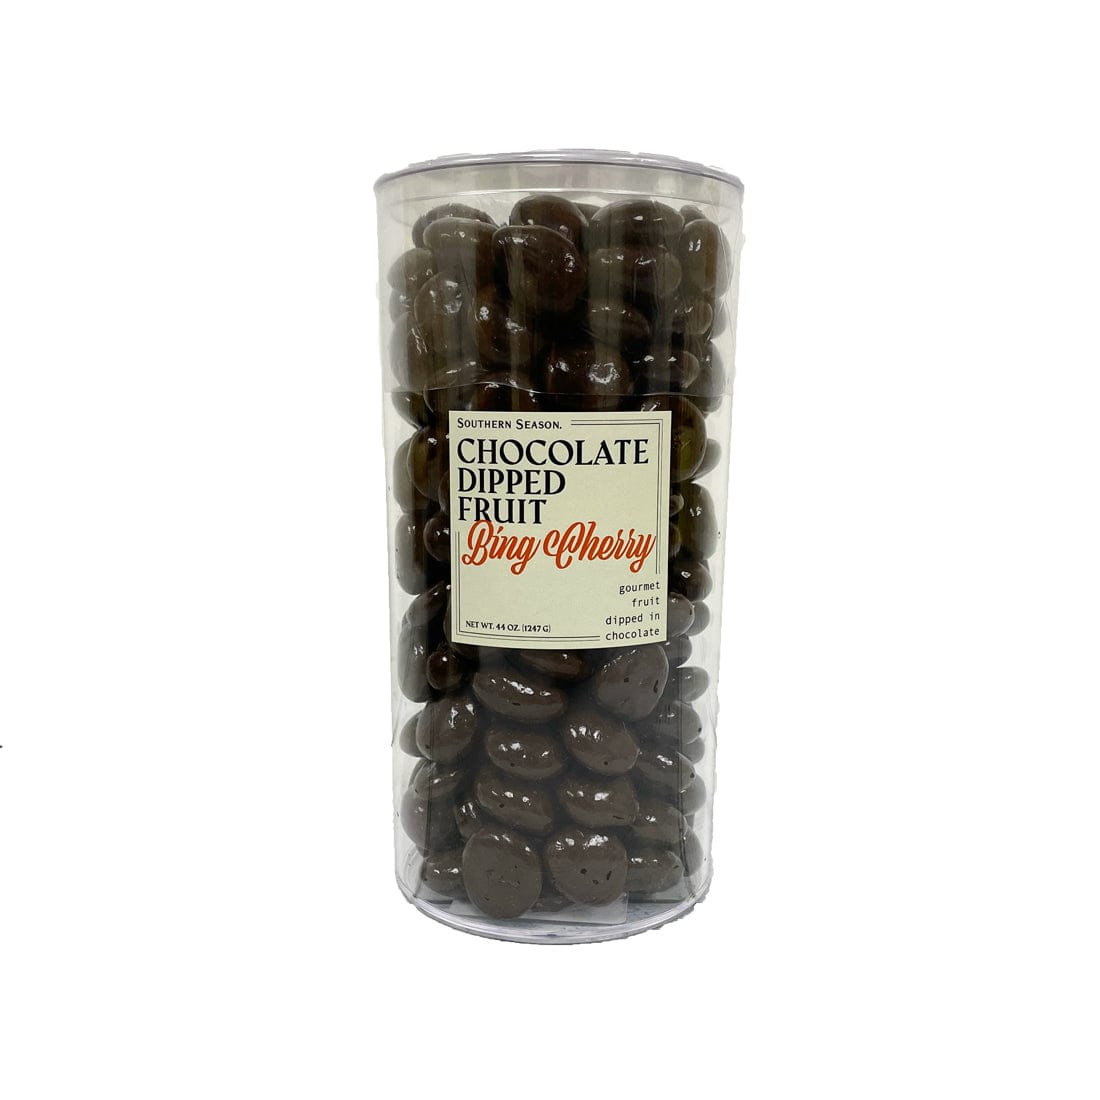 Southern Season Chocolate-Dipped Bing Cherries 44 oz